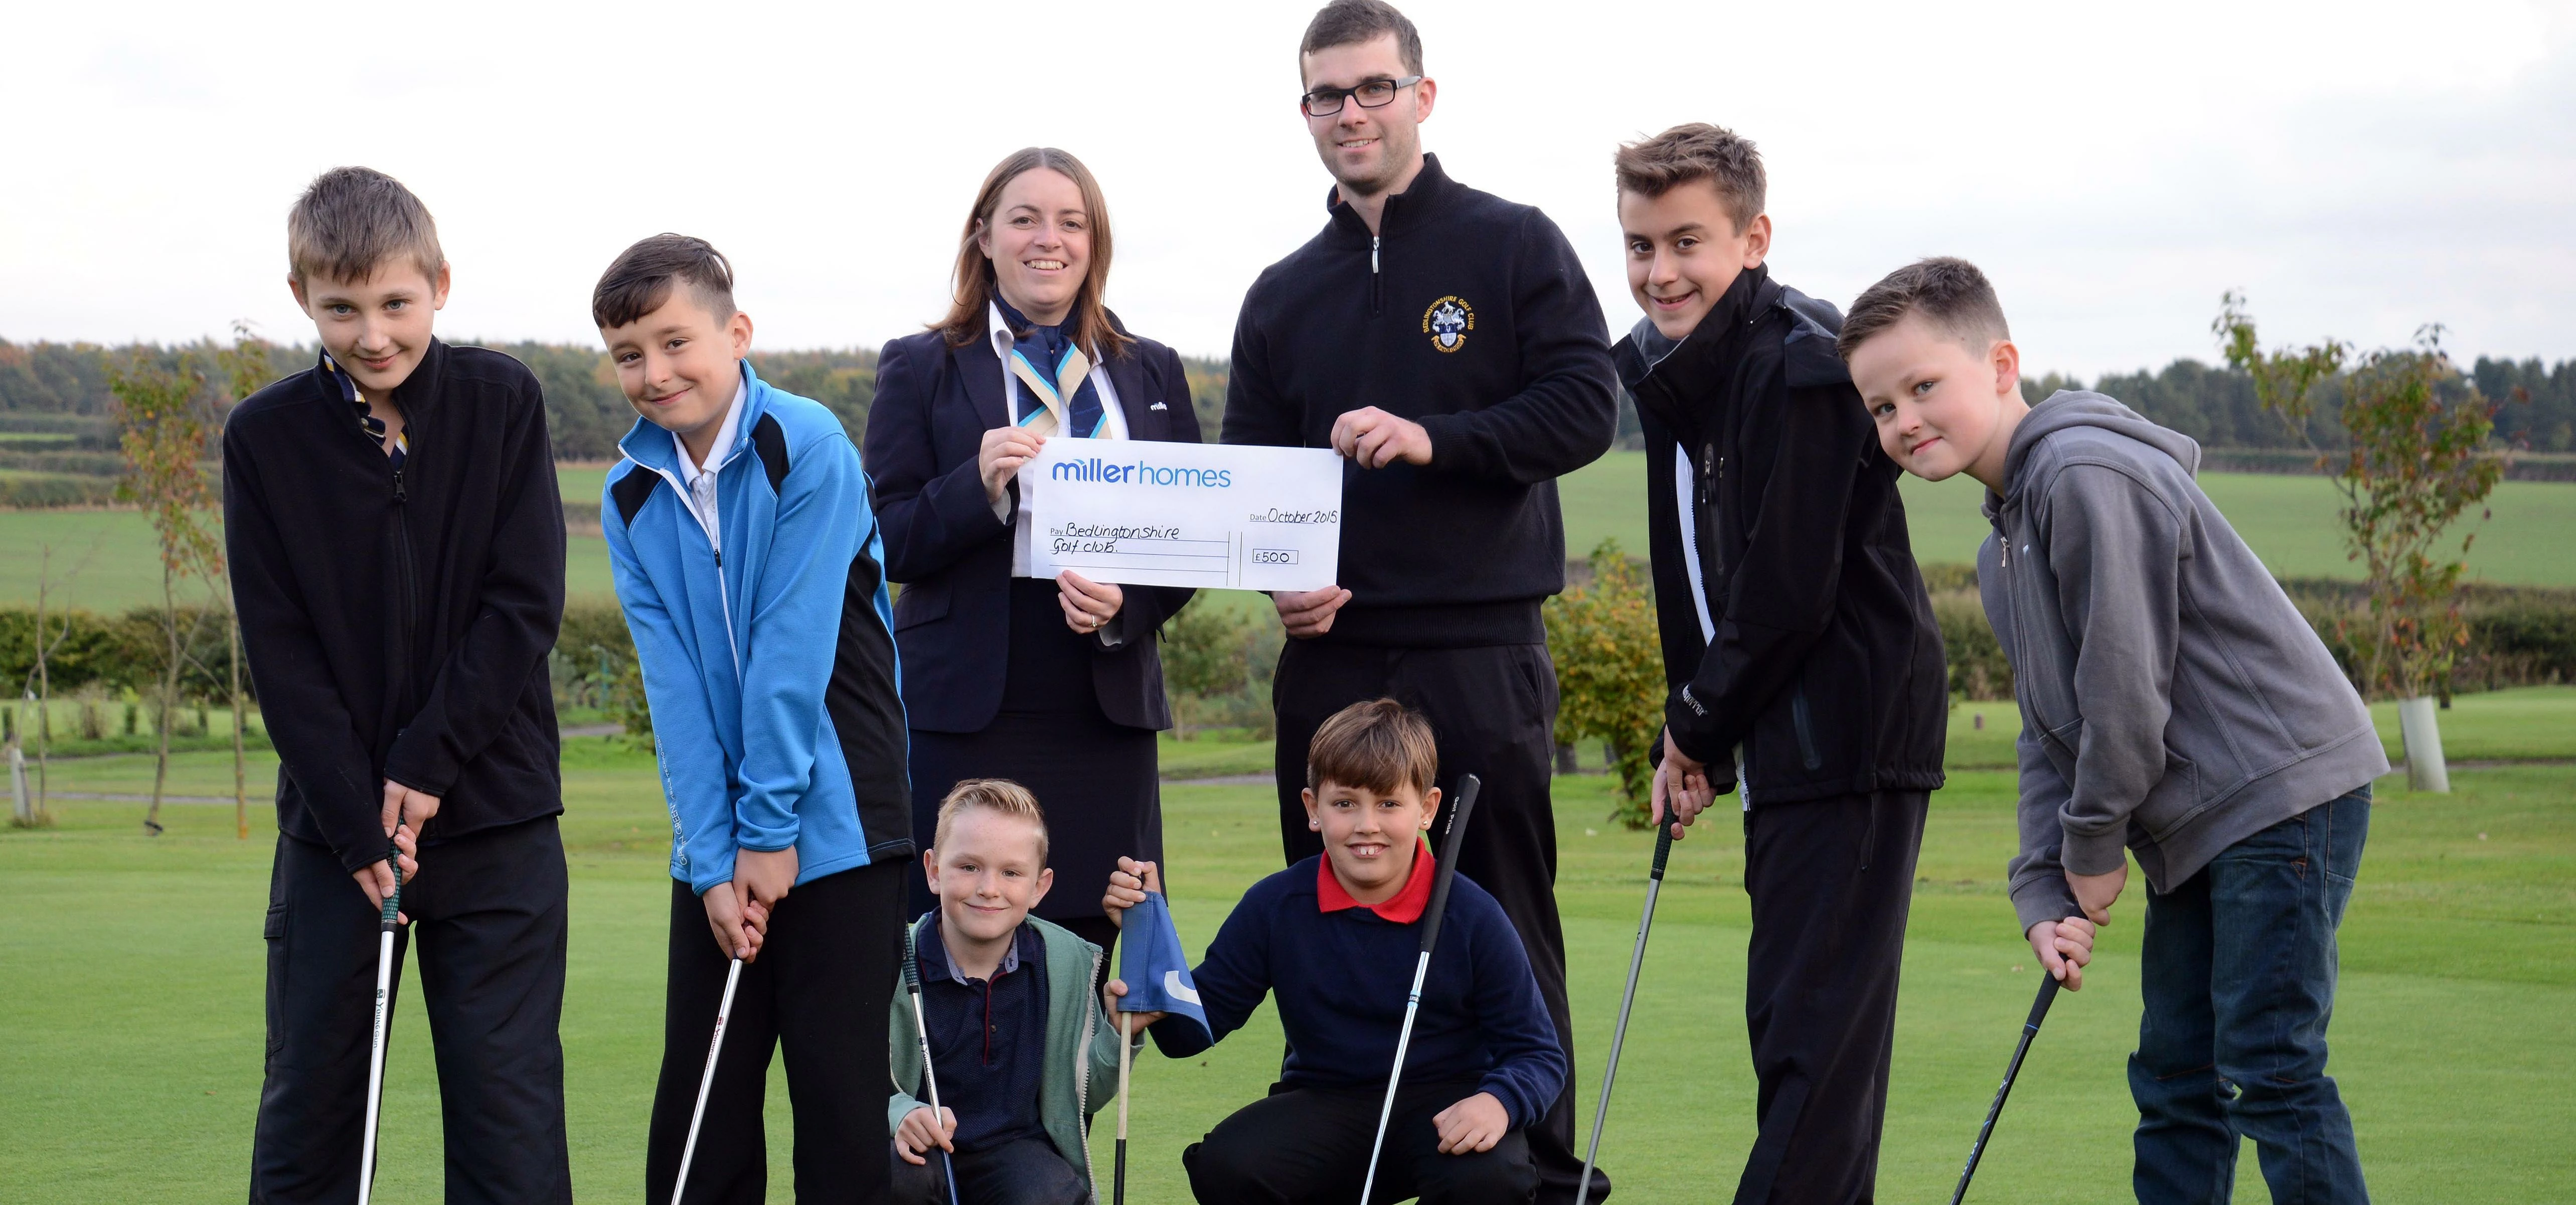 Peter Goldfinch (12), Charlie Gordon (11), Miller Homes’ Kayleigh Roberts, Bedlington Golf Club’s Ma